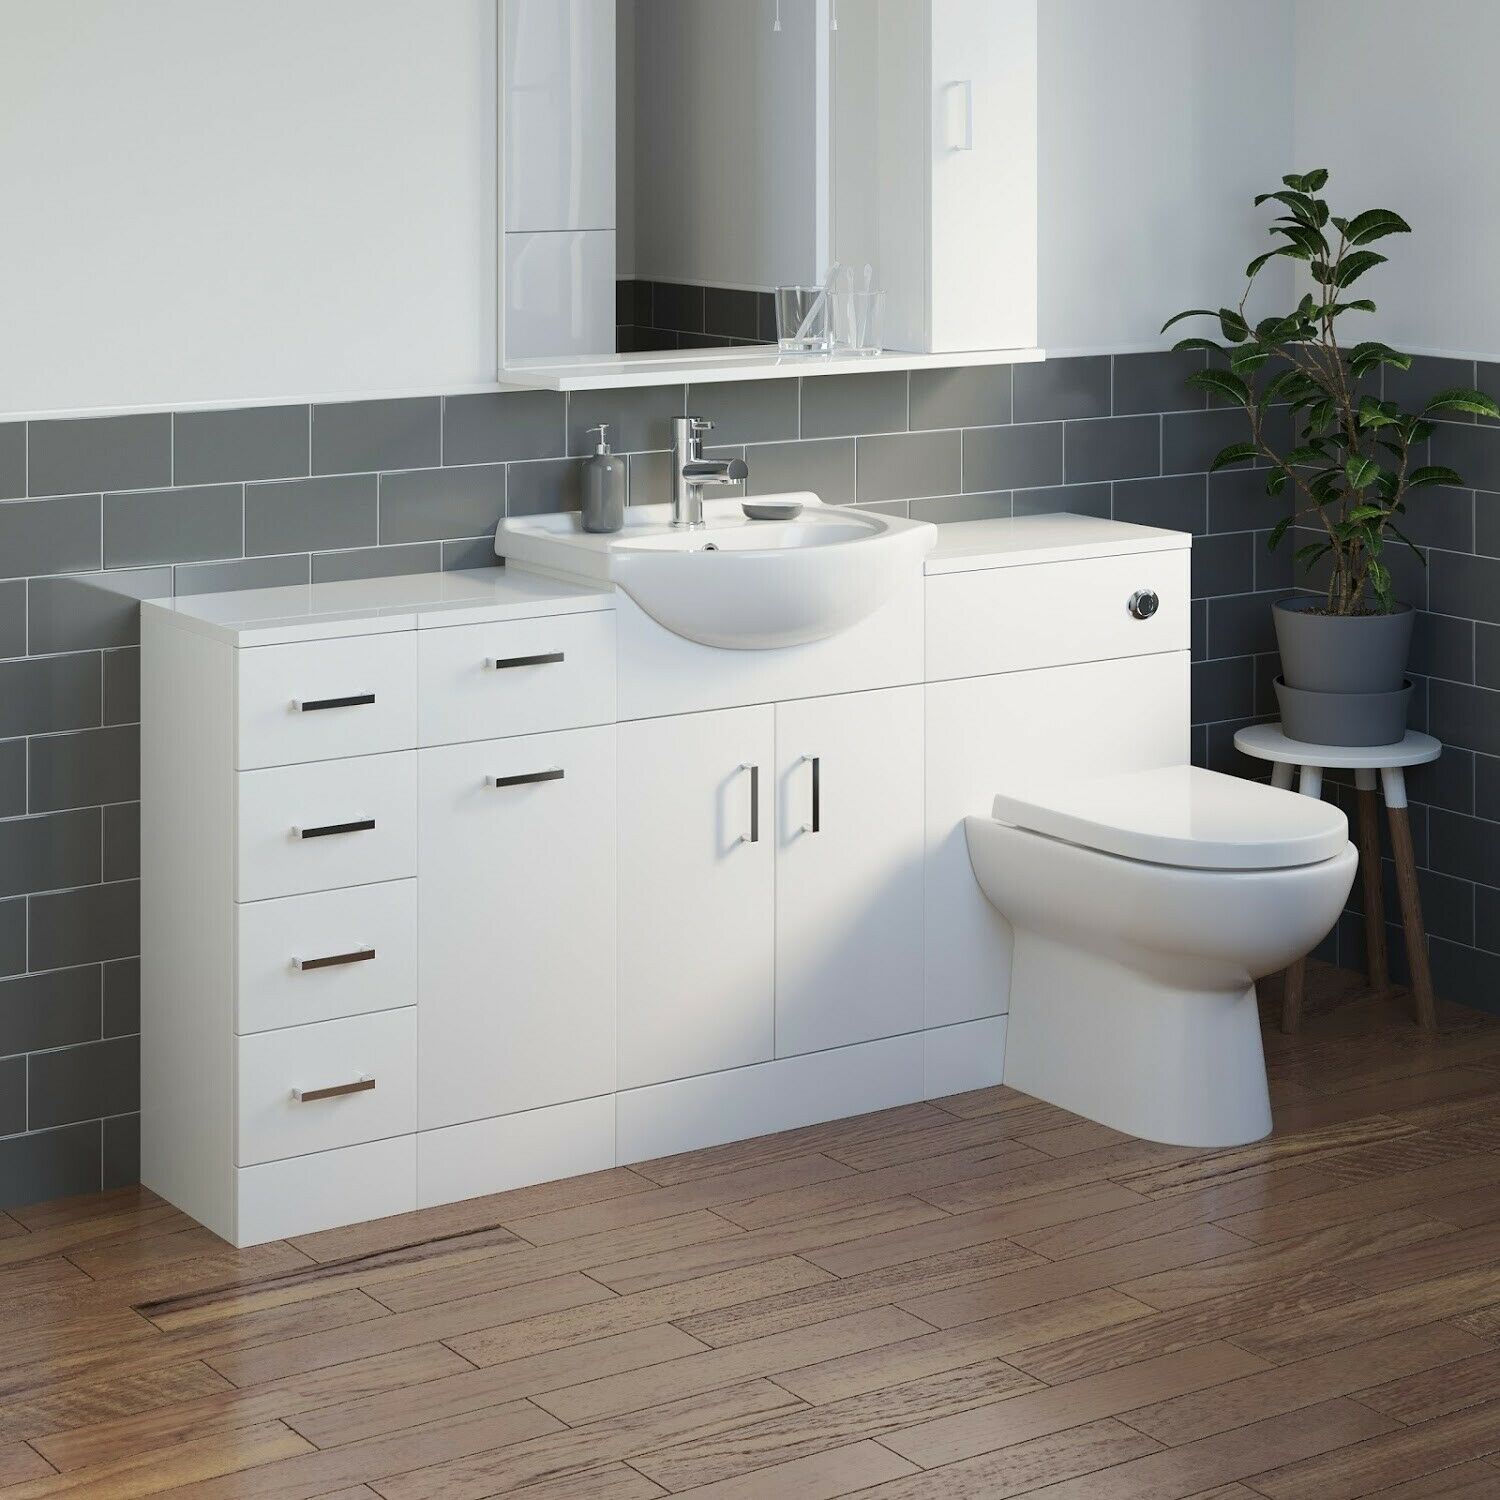 toilet and sink vanity unit Bathroom vanity unit drawer cabinet laundry storage toilet furniture